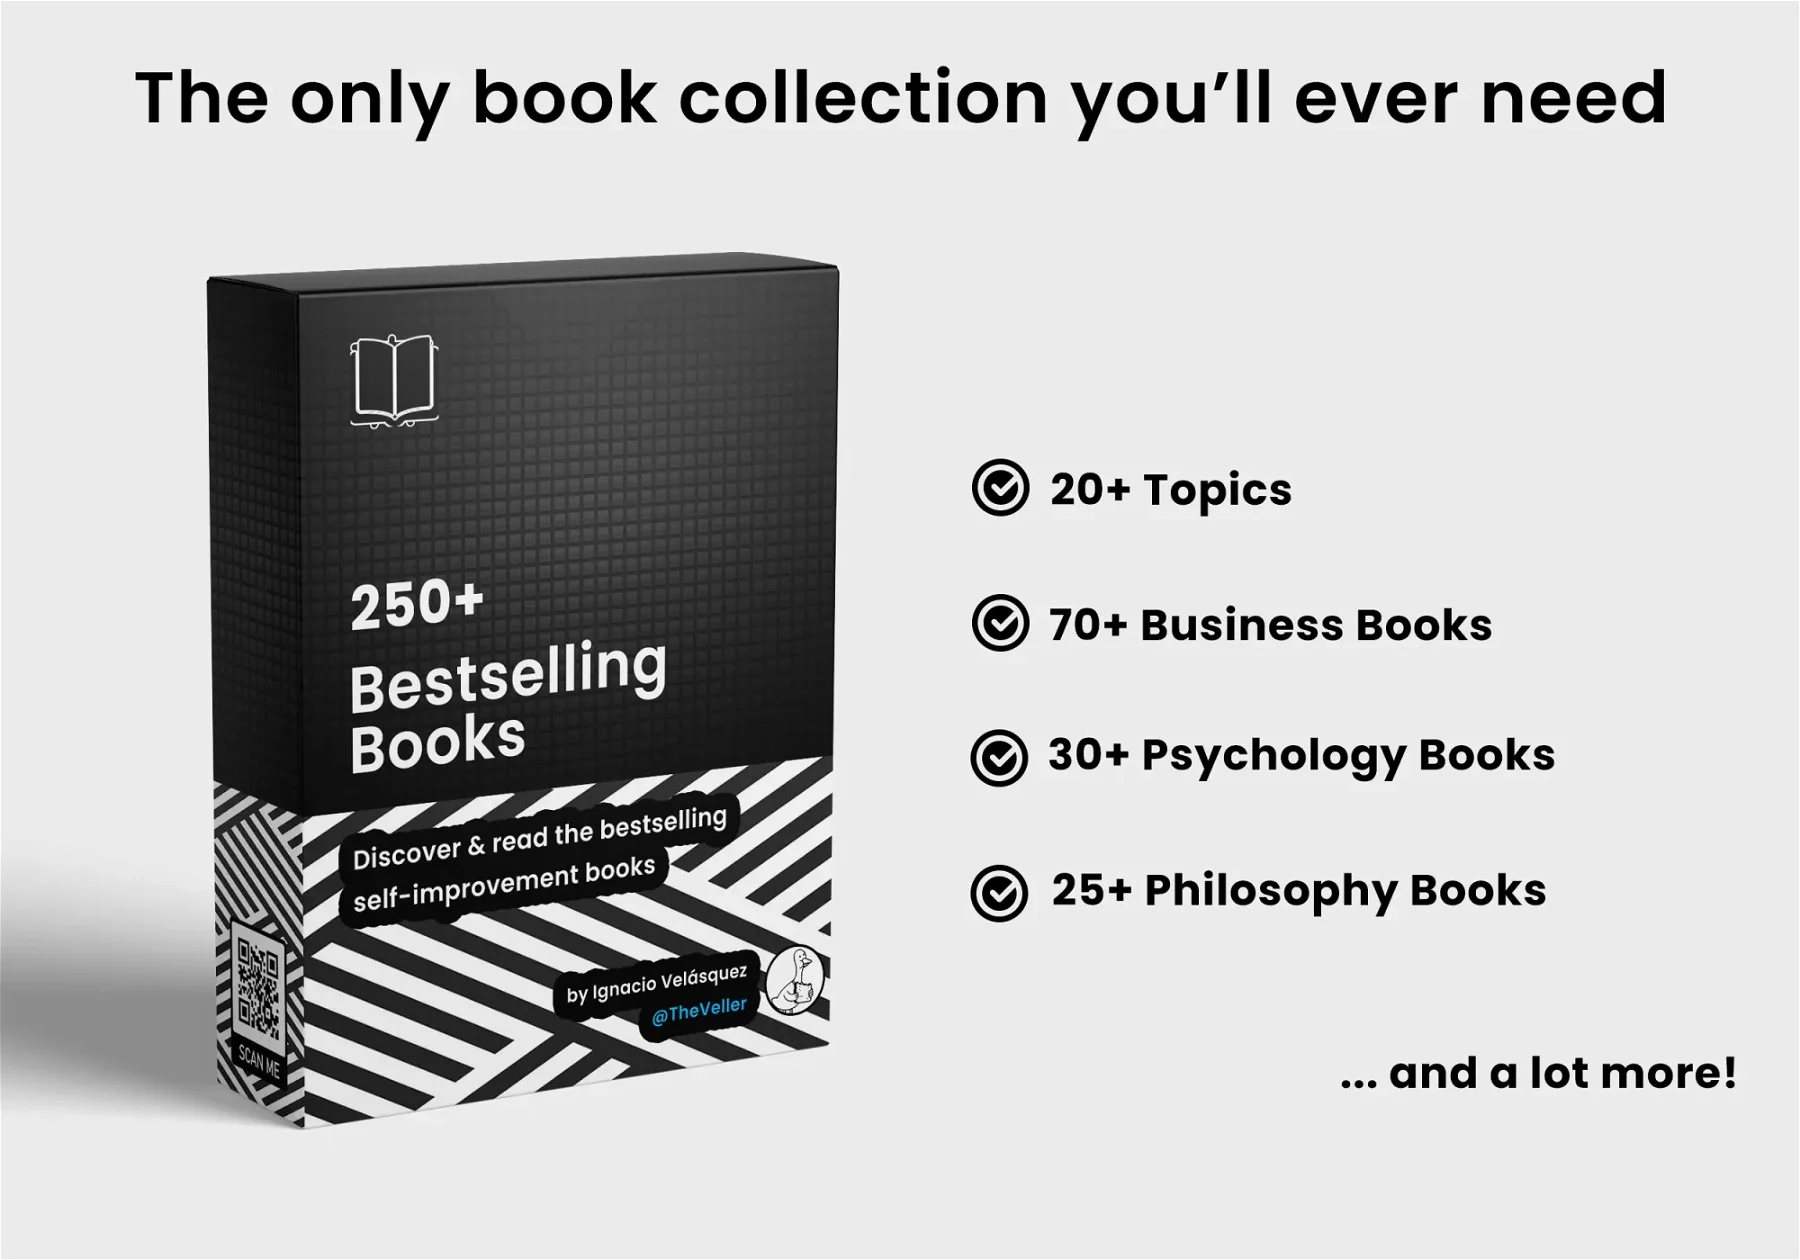 250+ Bestselling Books